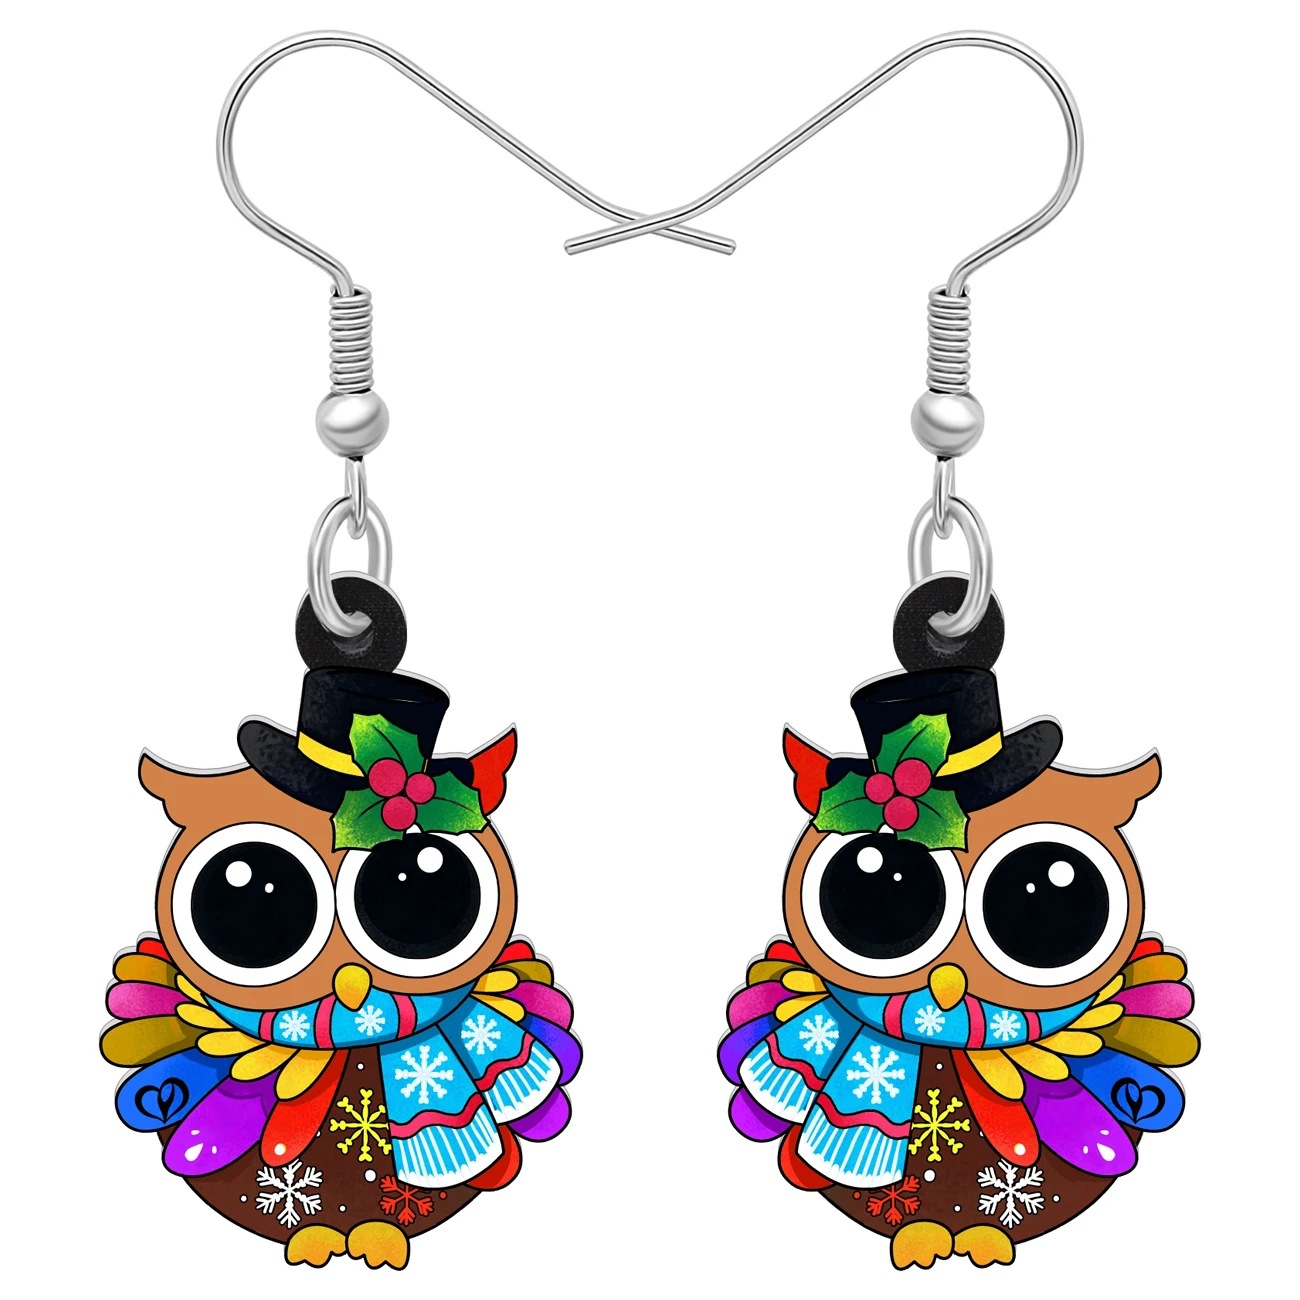 cross-border new arrival acrylic cute big eyes owl earrings pendant pendant accessories for women kids girls